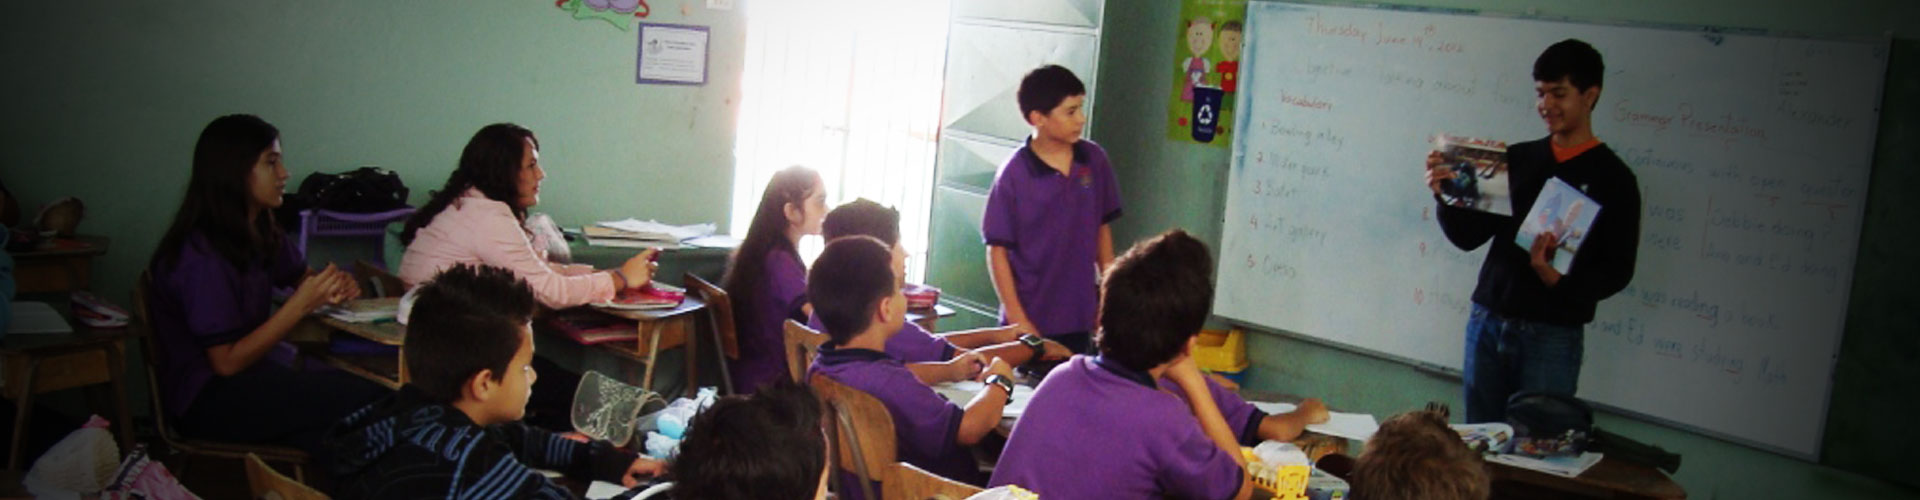 Teaching English Volunteer Program in Costa Rica 